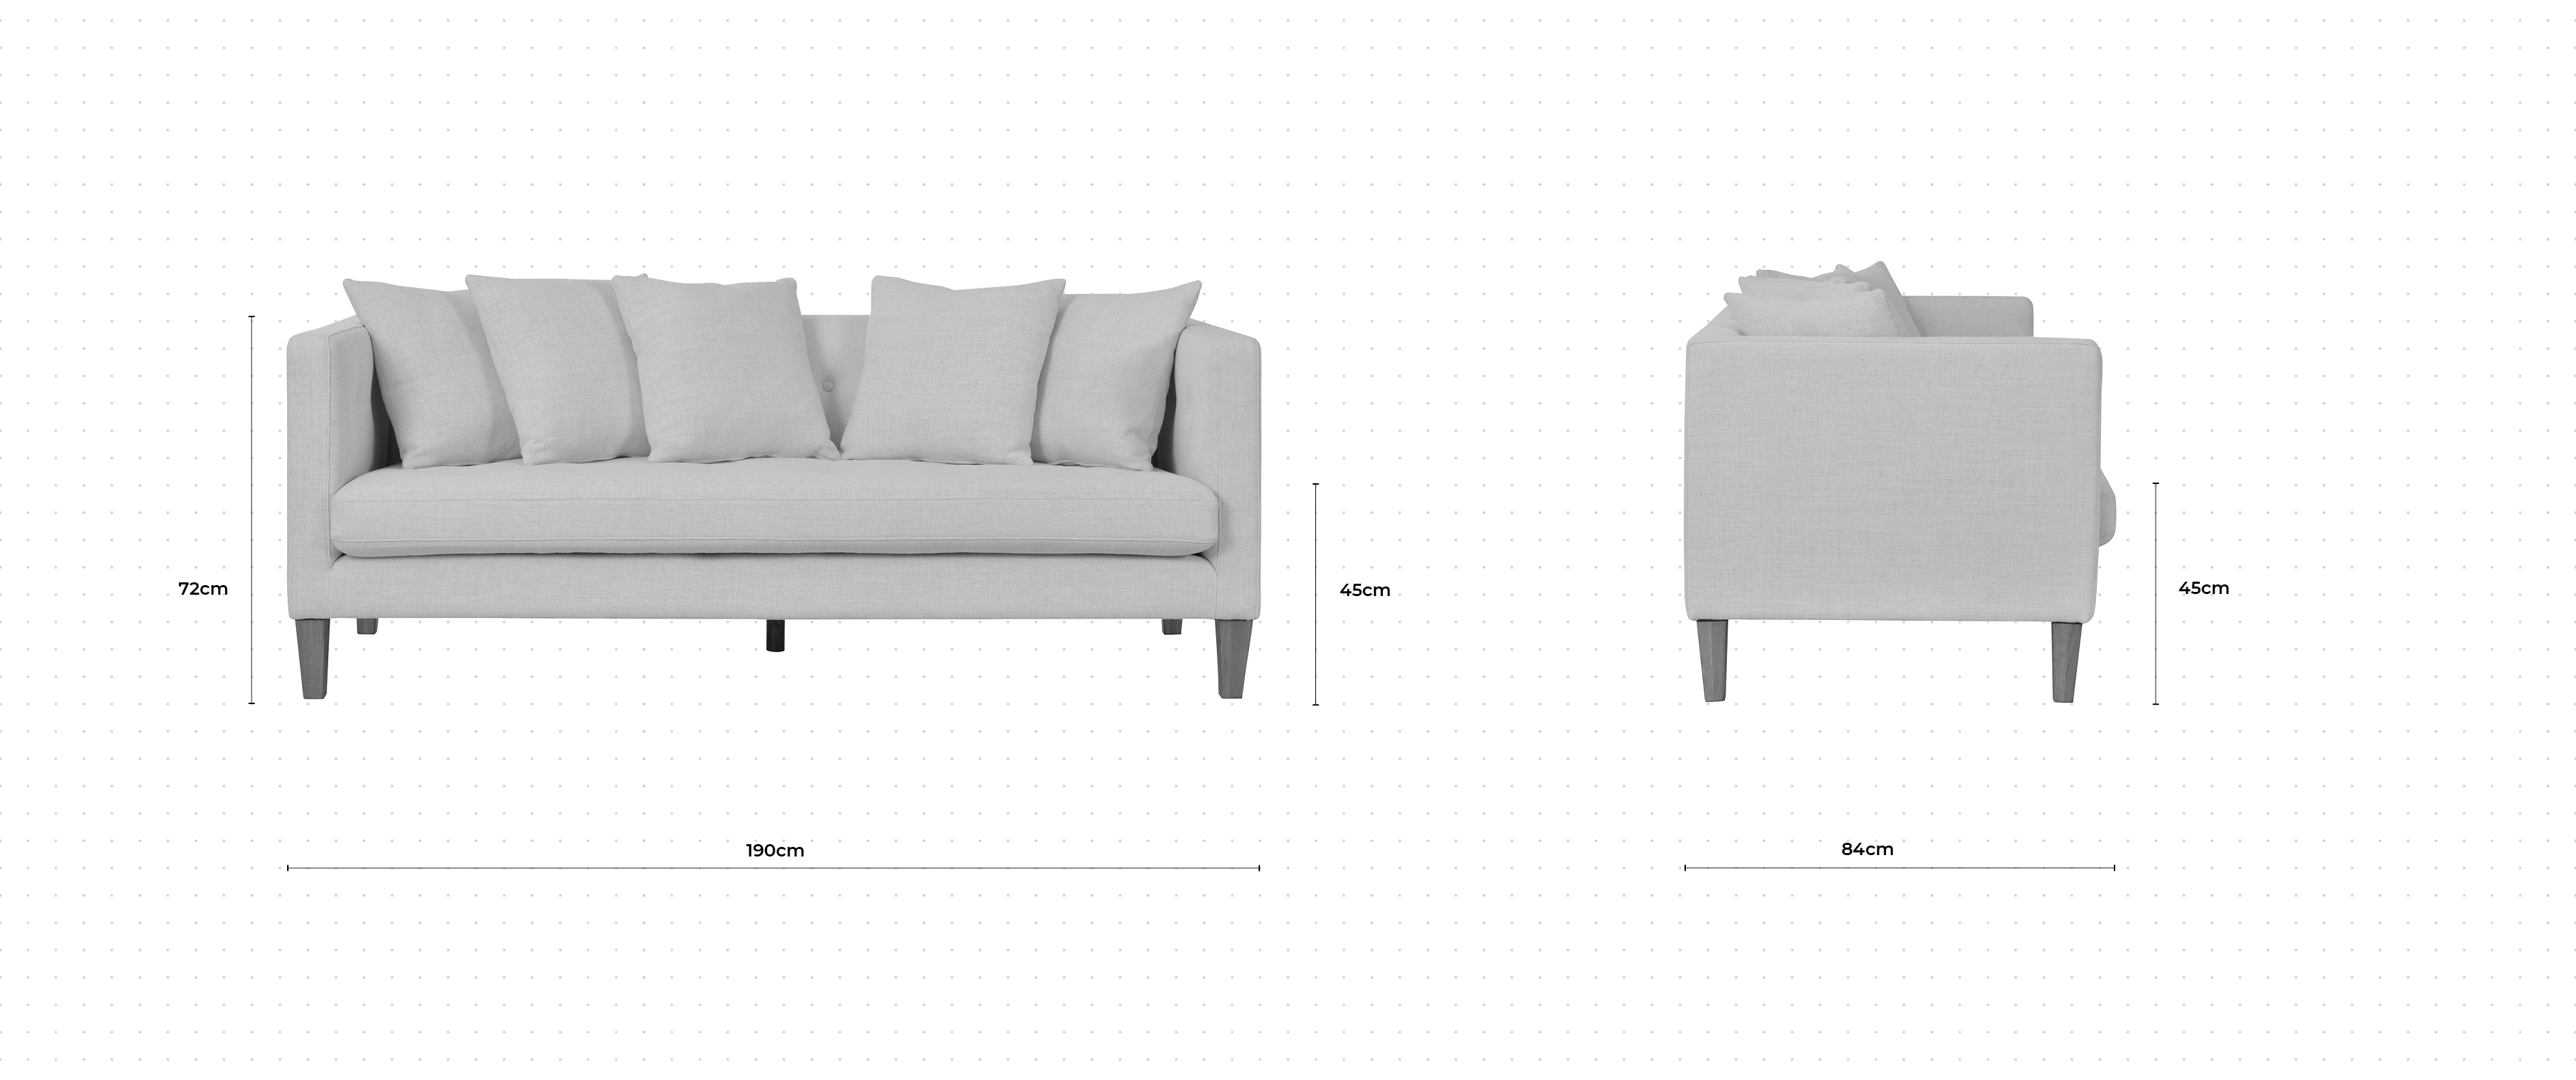 Dulwich 3 Seater Sofa dimensions